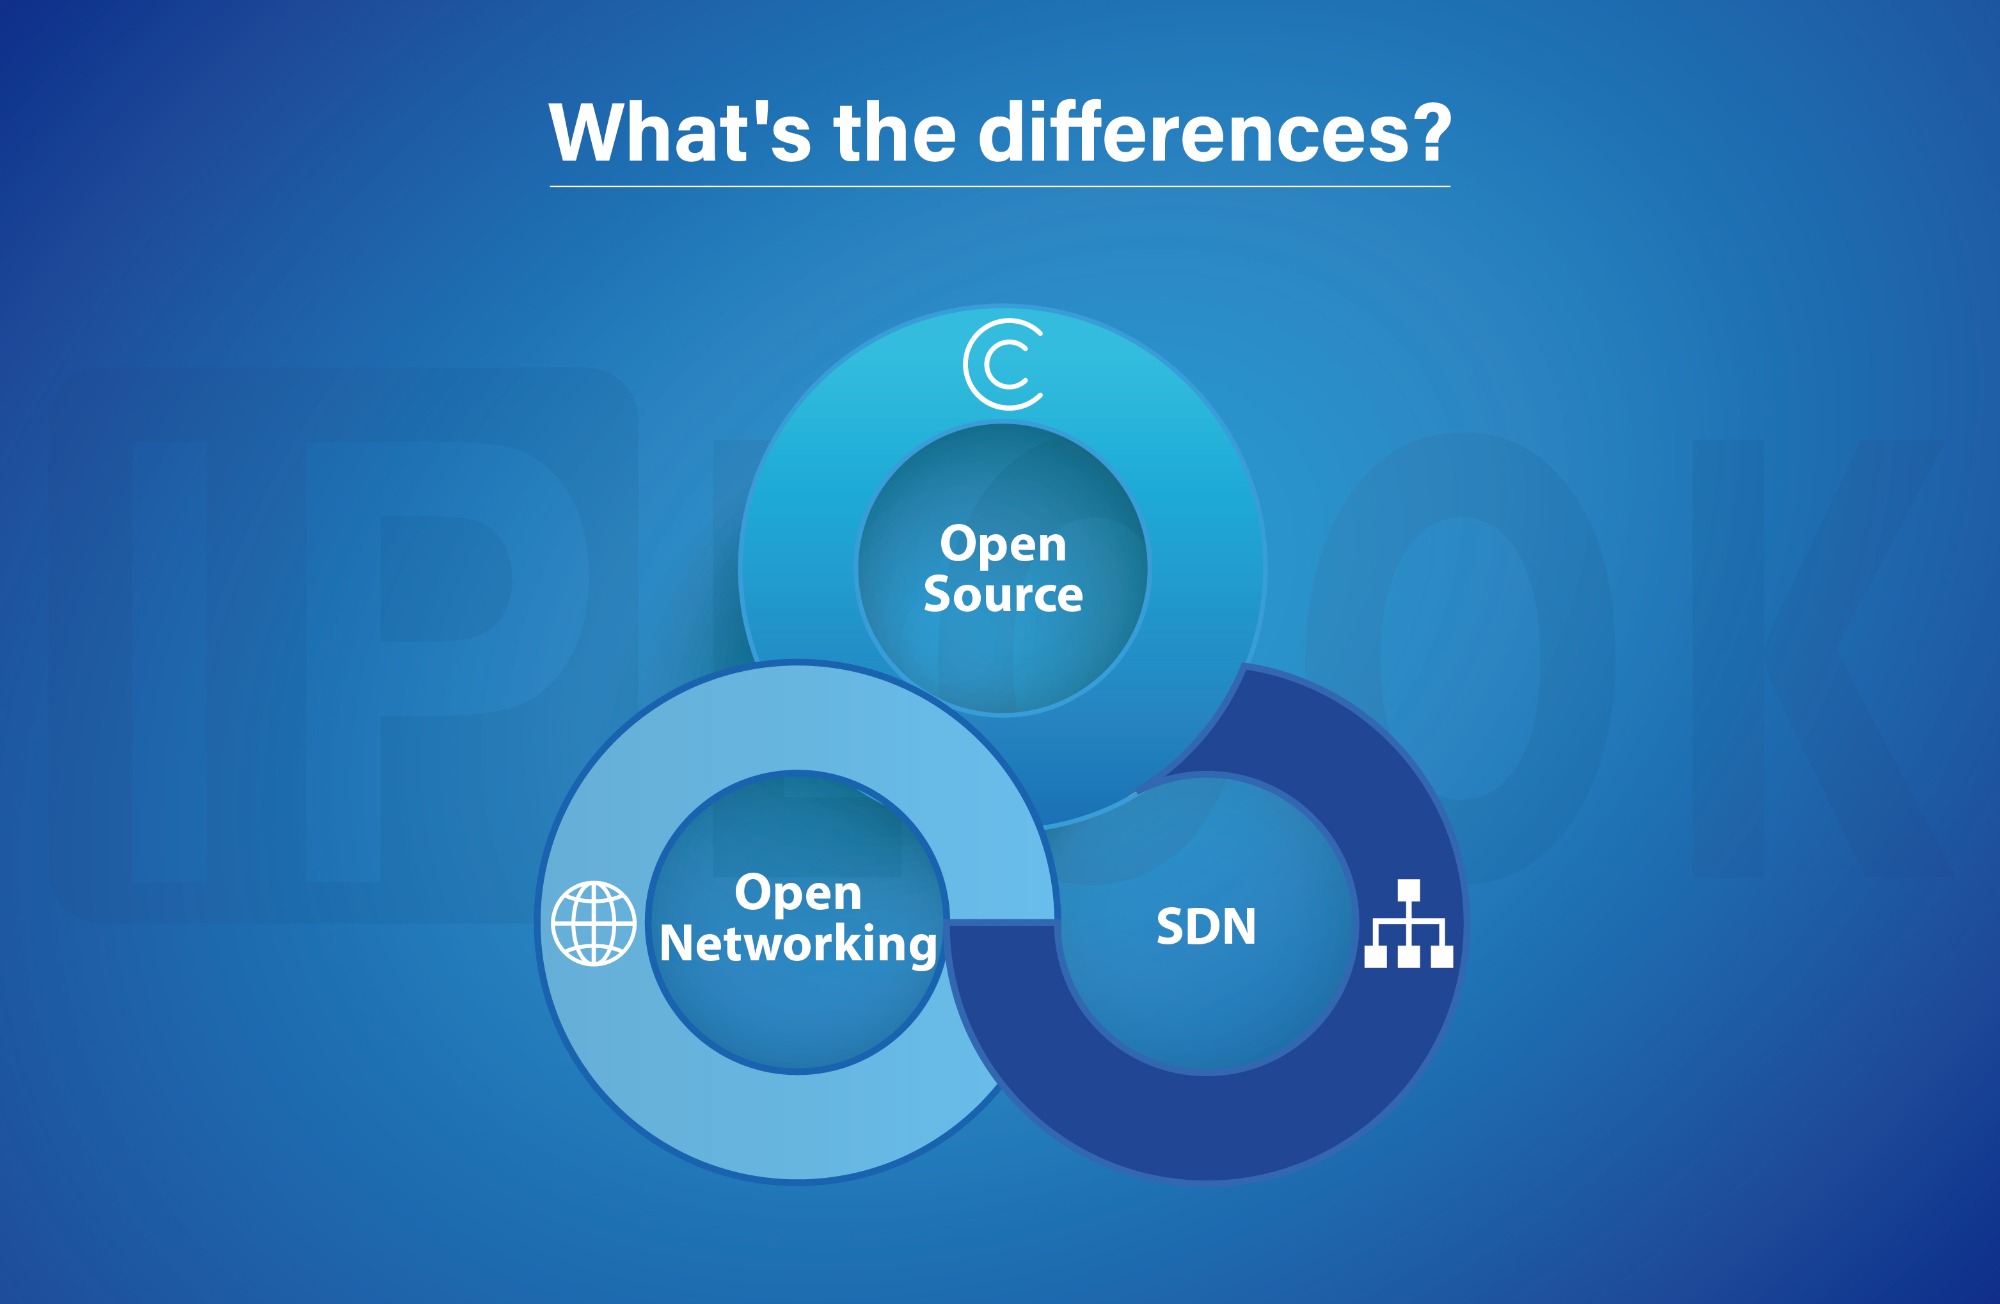 Open Source vs Open Networking vs SDN